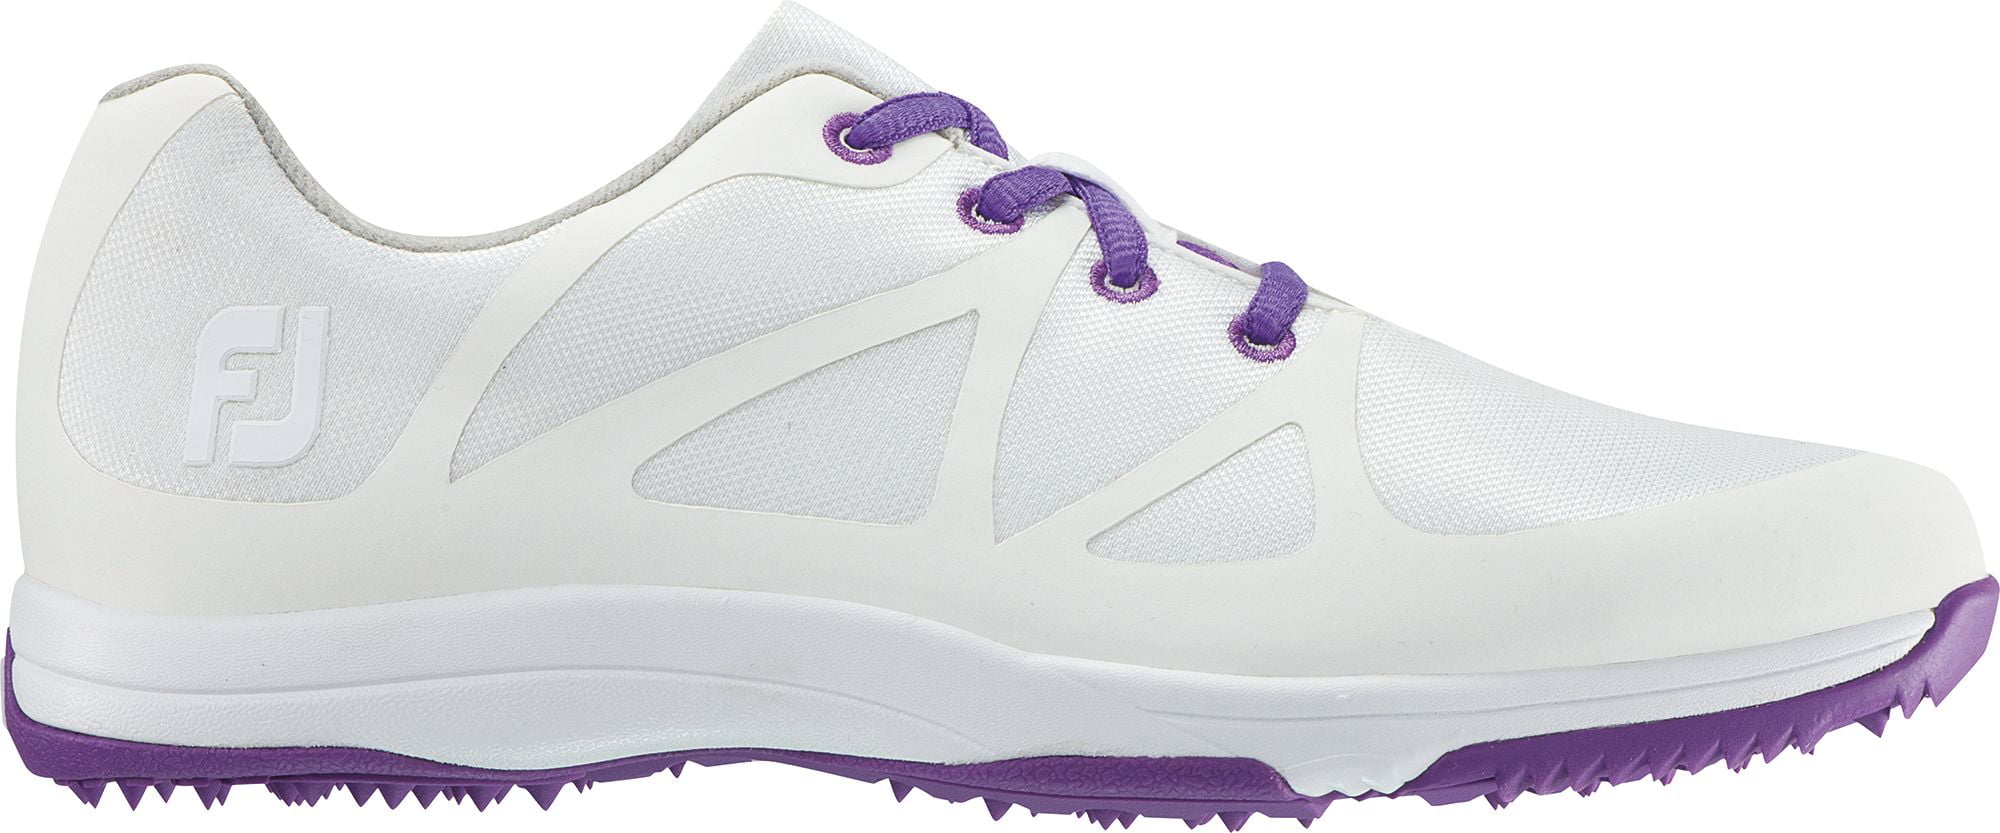 LEISURE Golf Shoes (White/Purple 